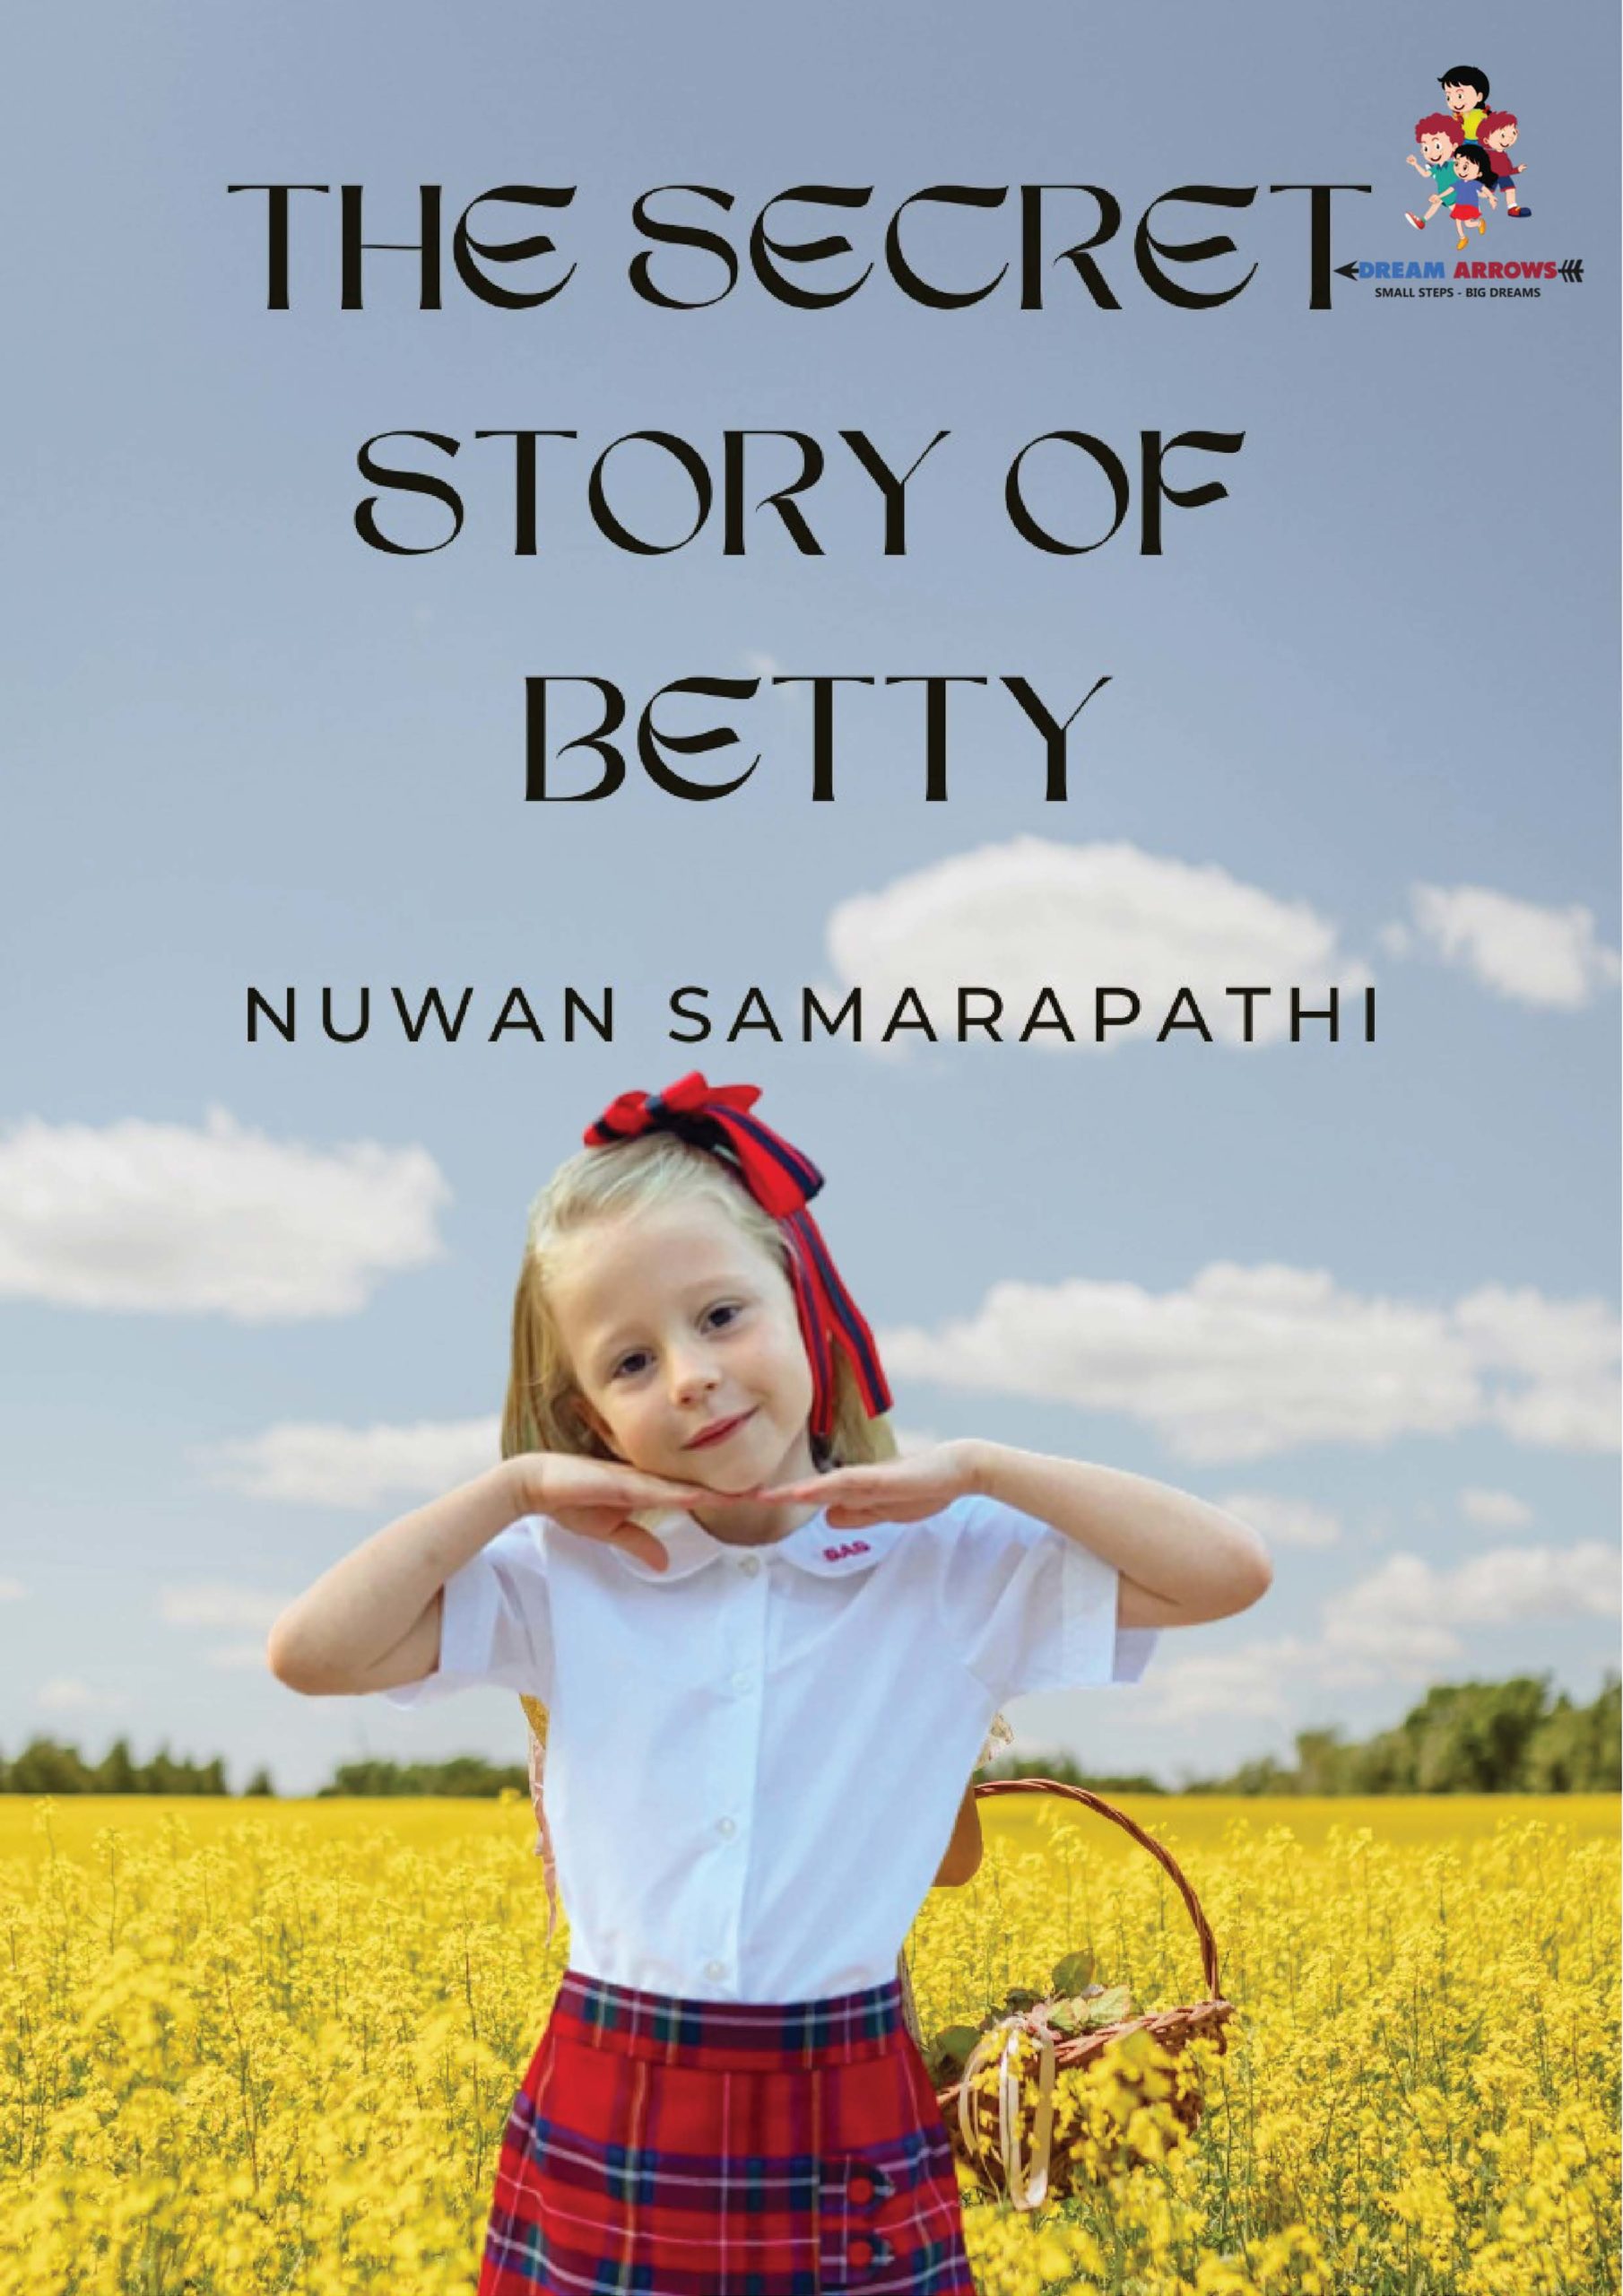 The secret story of Betty